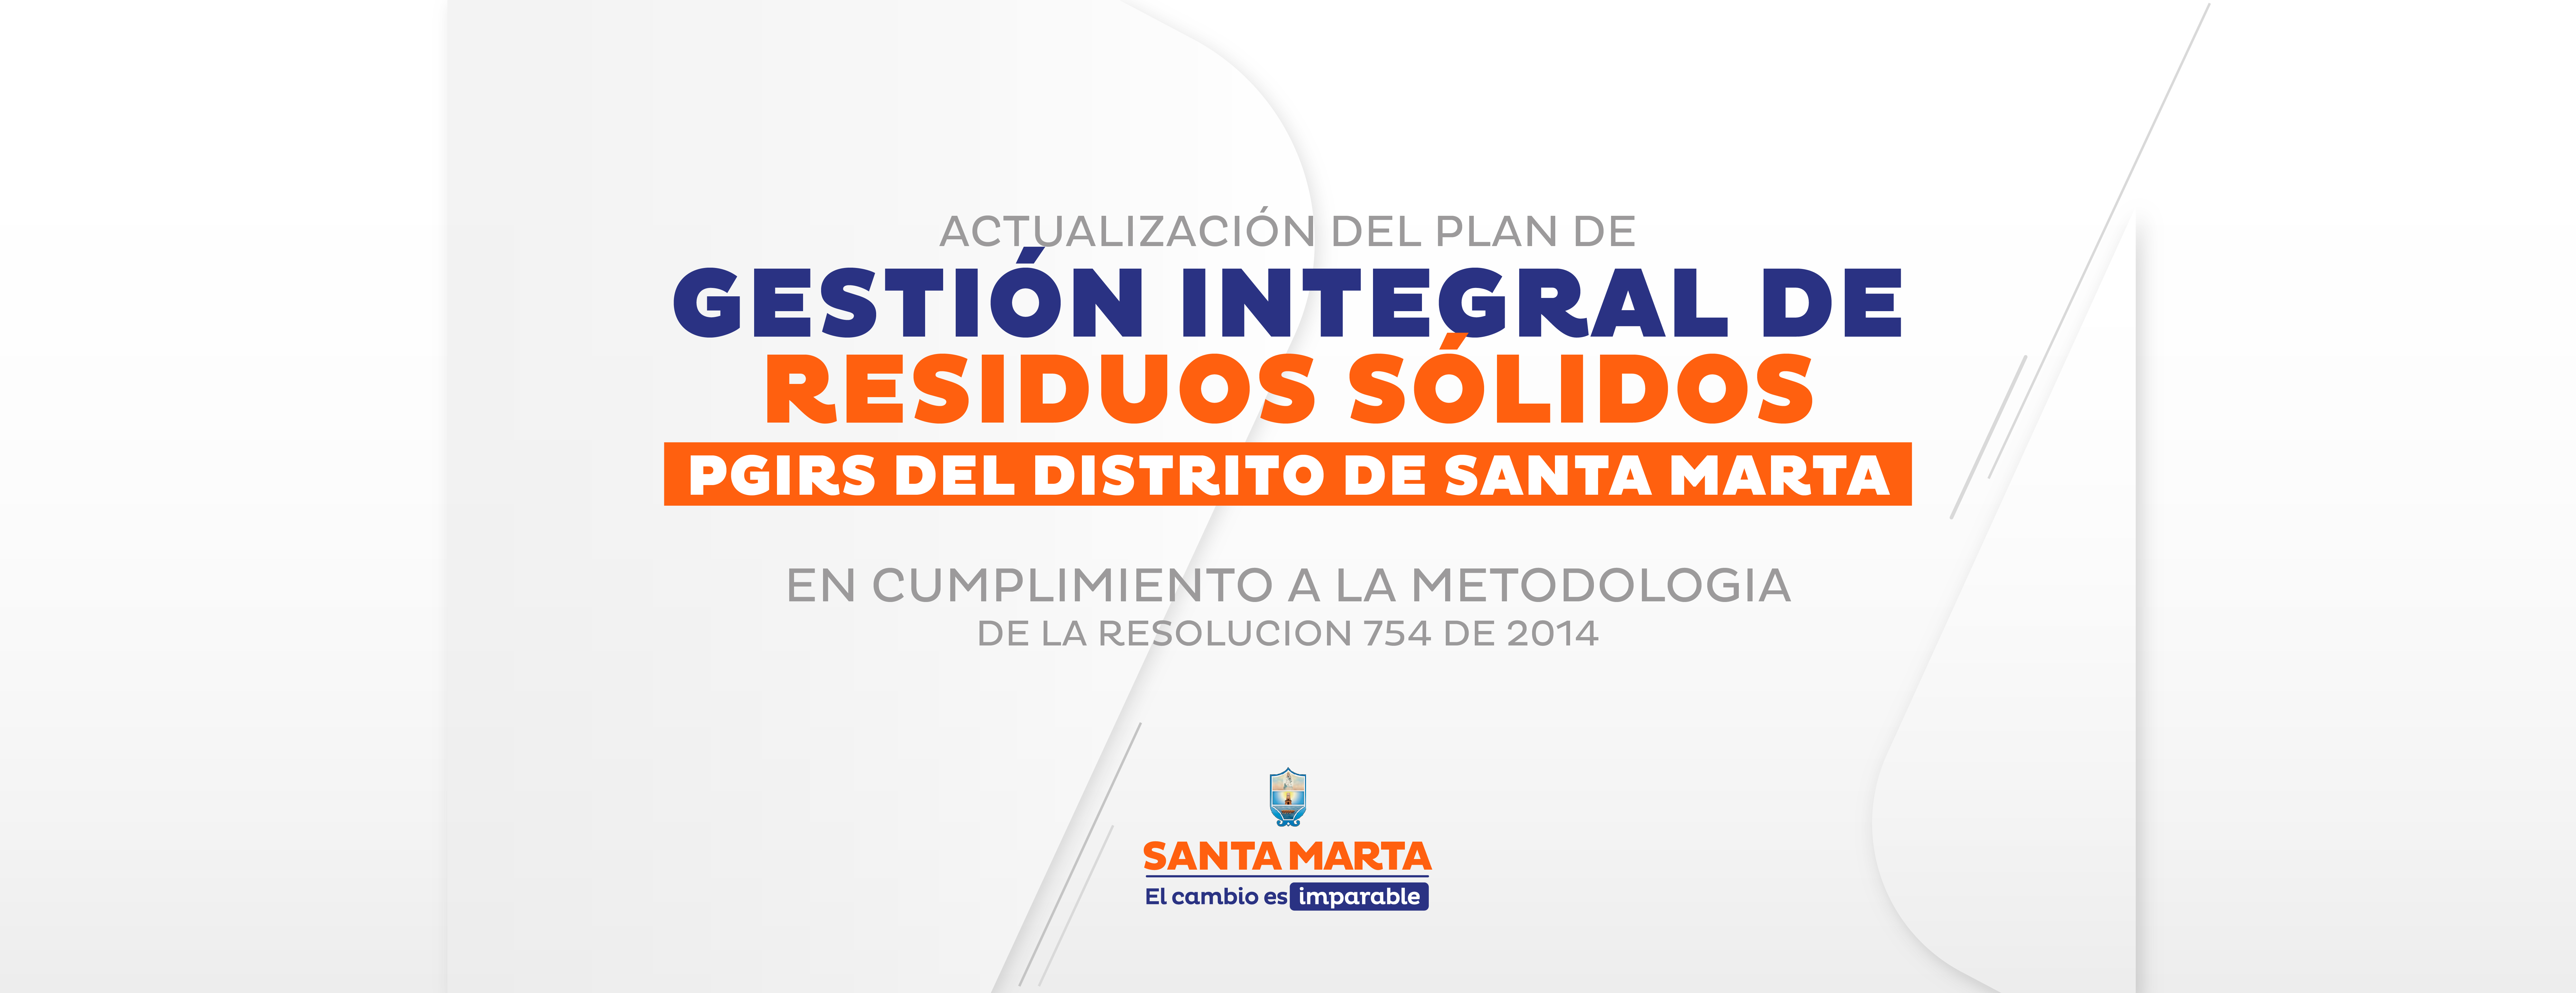 https://www.santamarta.gov.co/sites/default/files/slider_web_actualizacion_del_plan_de_gestion_integral-01.jpg